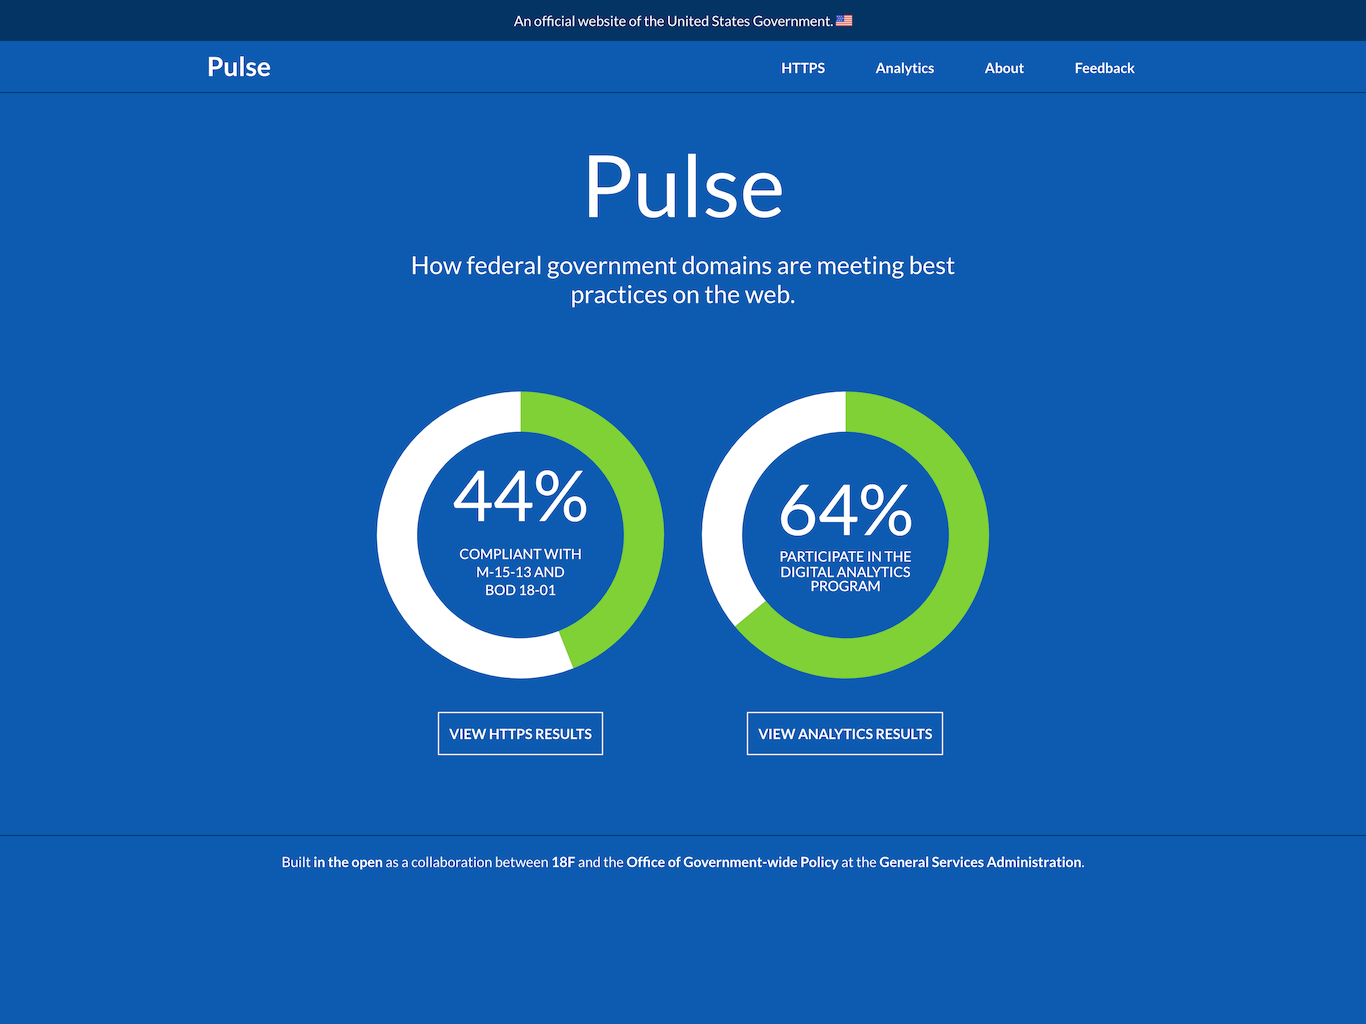 The pulse.cio.gov homepage